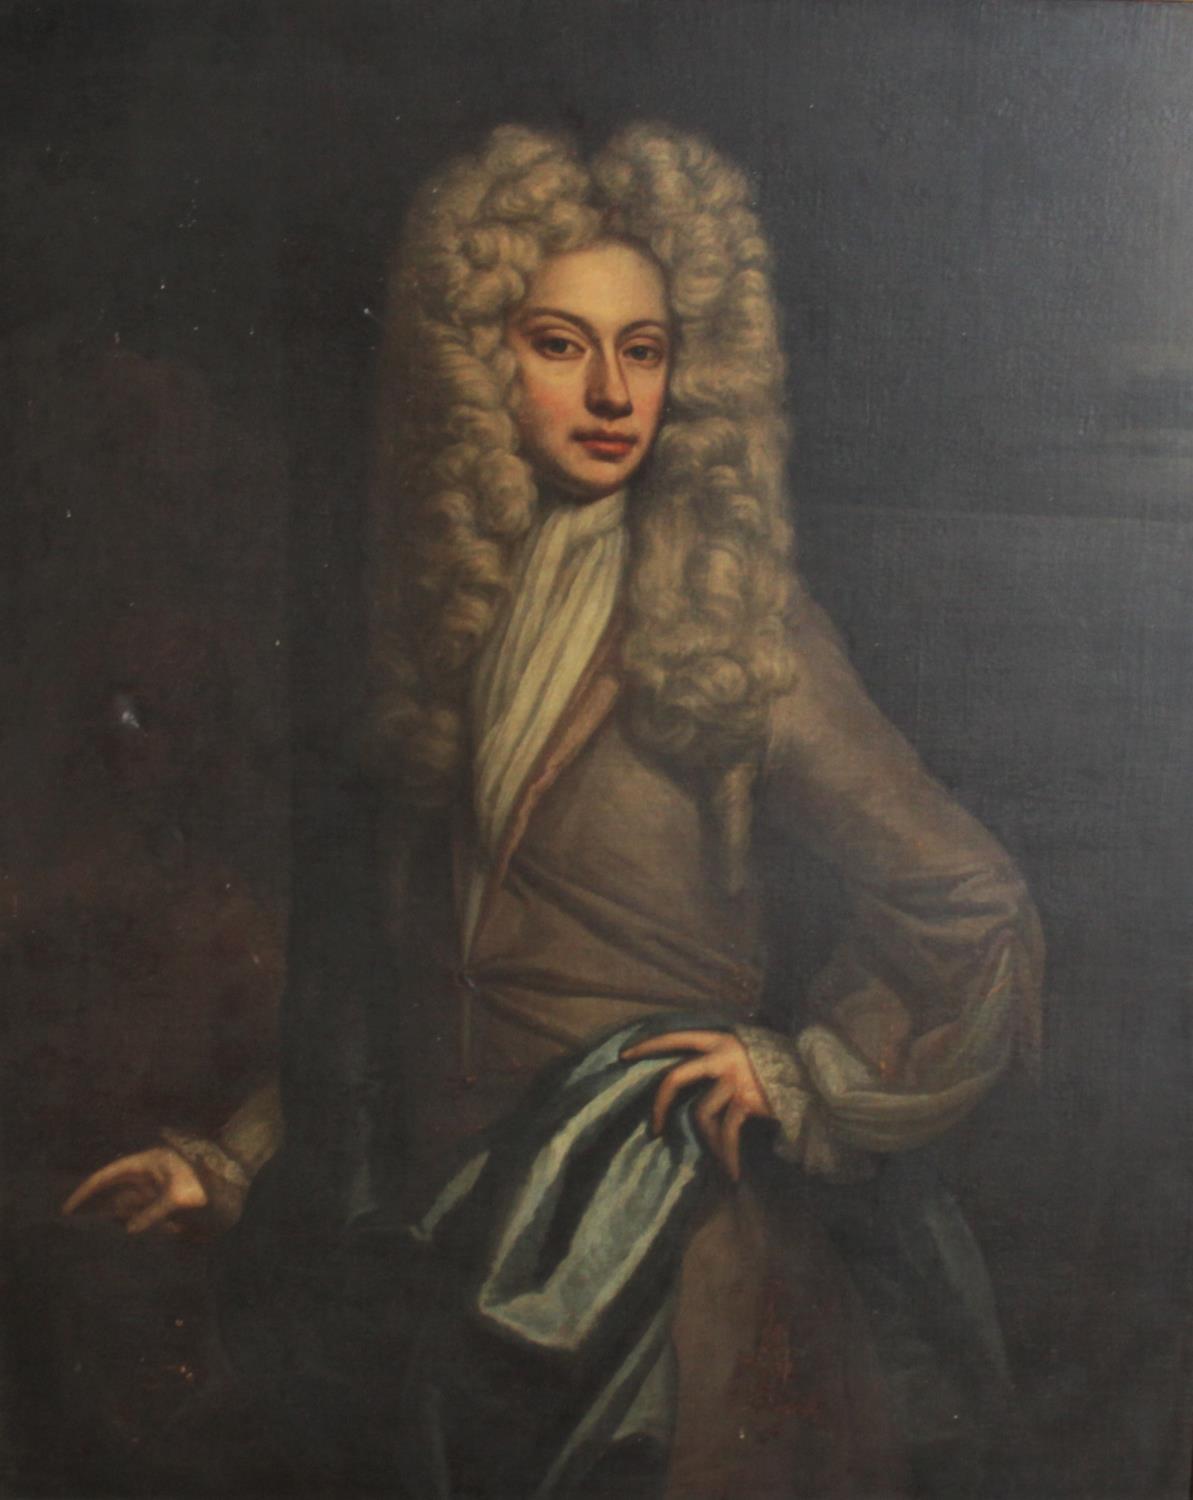 Follower of Johann Baptist Closterman (1660-1711), Portrait of James Tyrell, Three quarter length